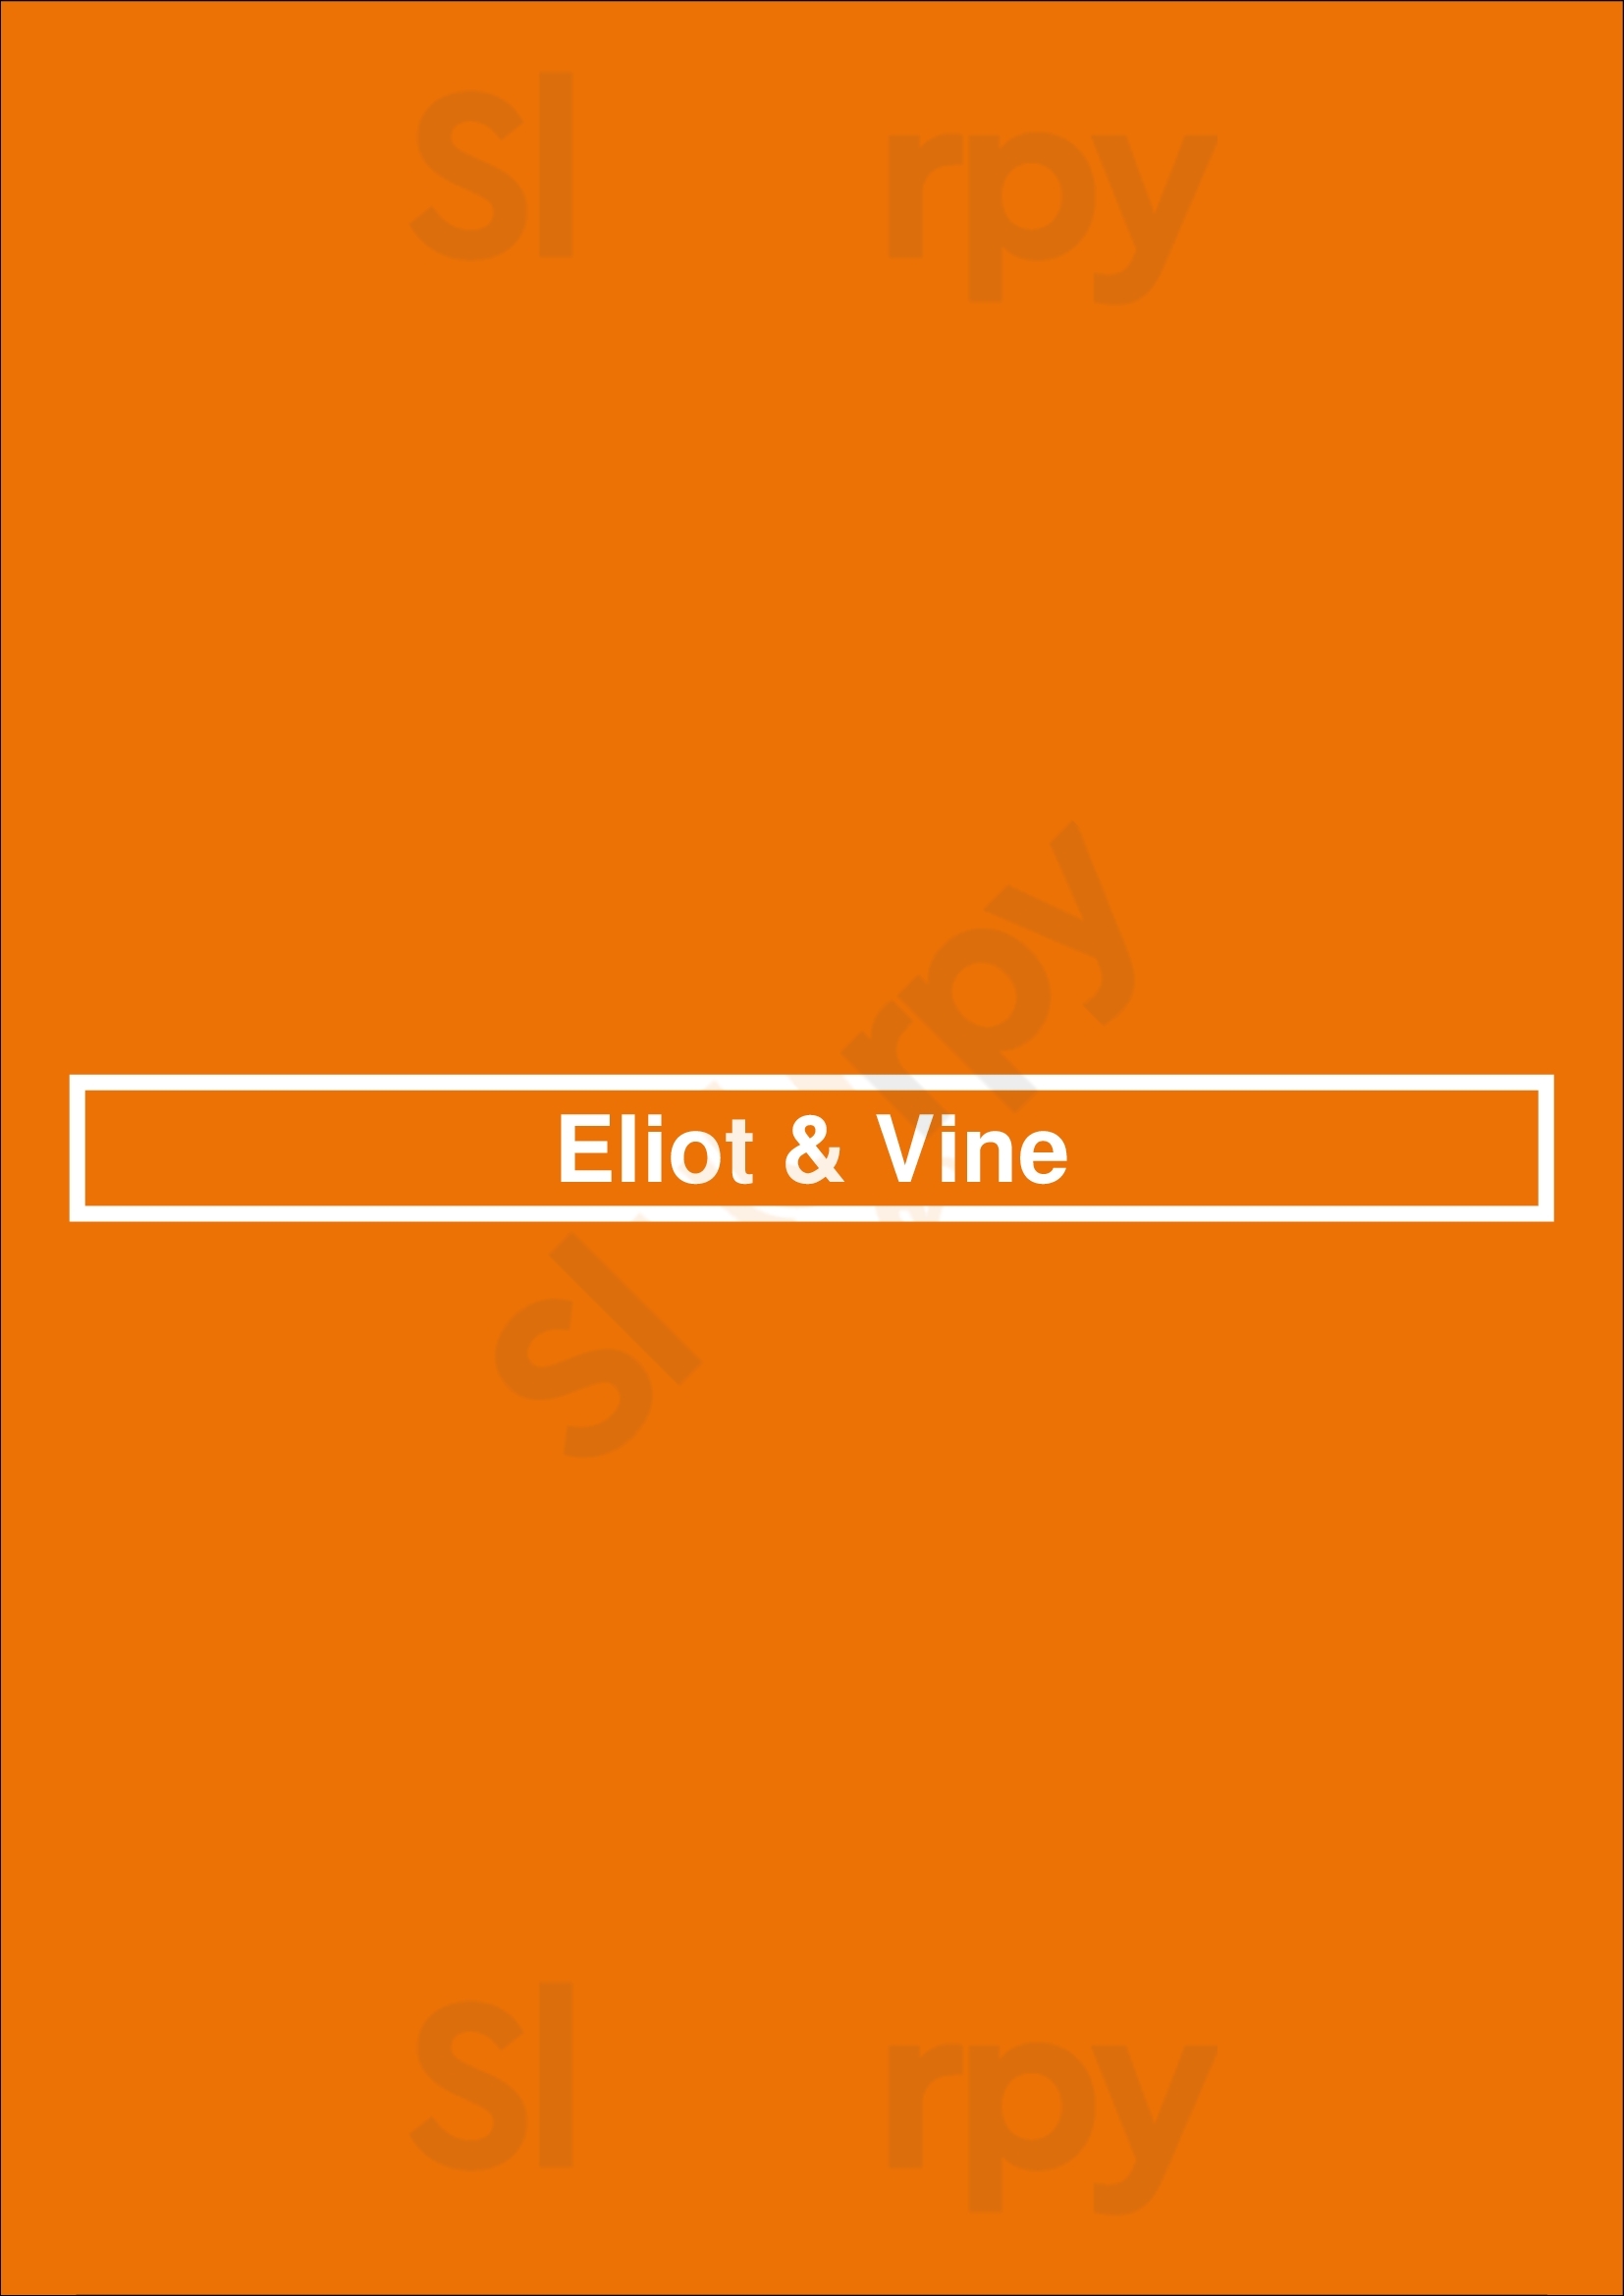 Eliot & Vine Halifax Menu - 1